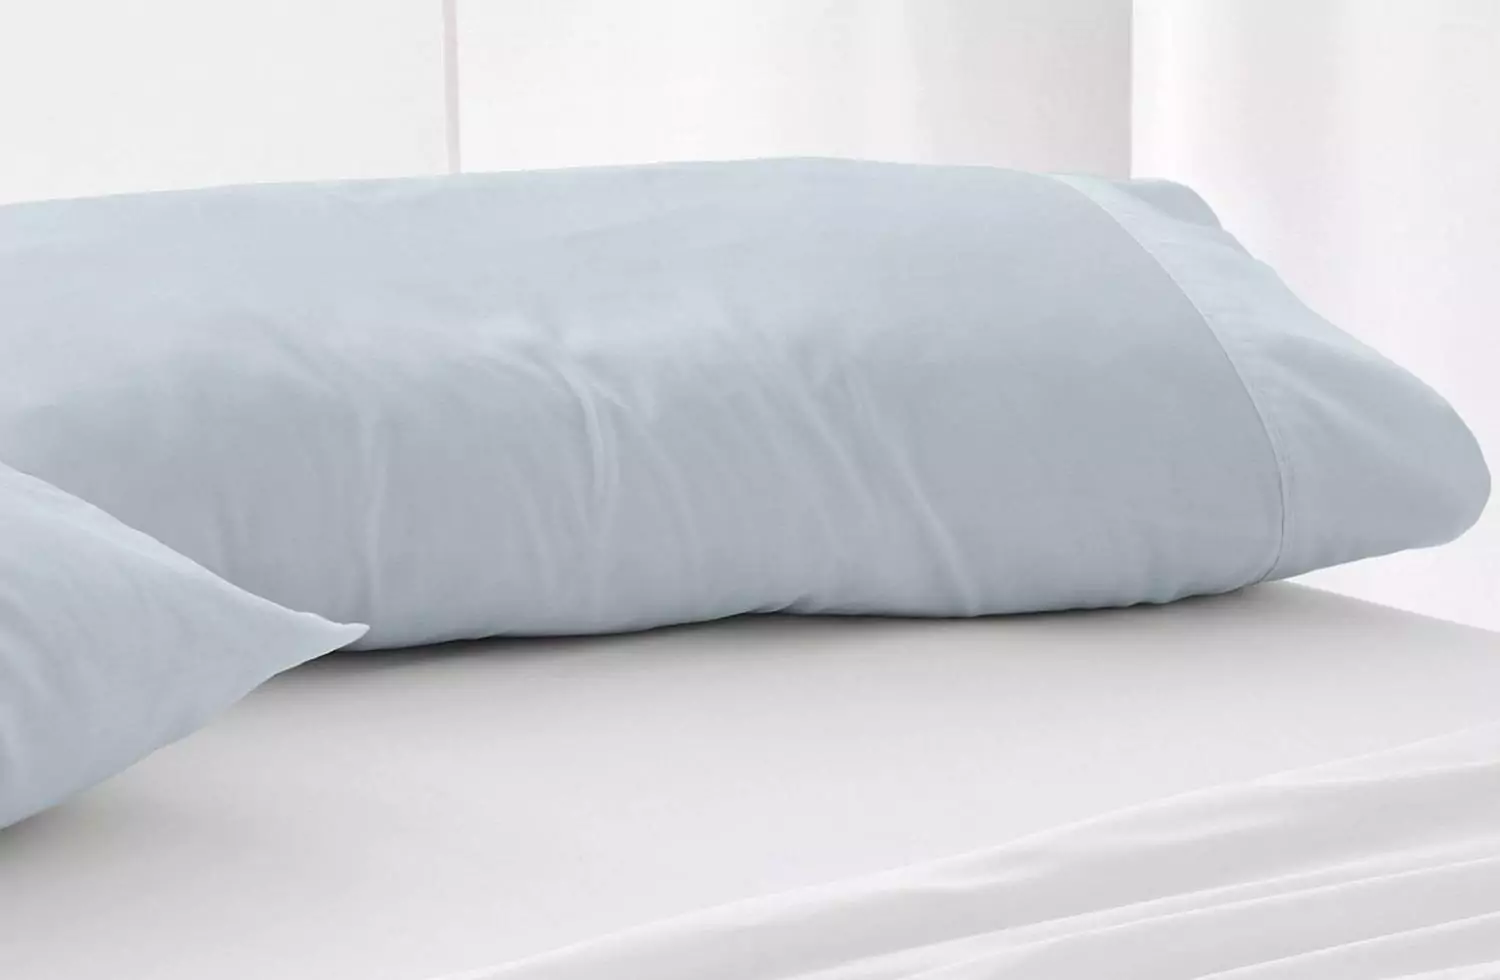 Funda de almohada de algodón visón cama 90 cm